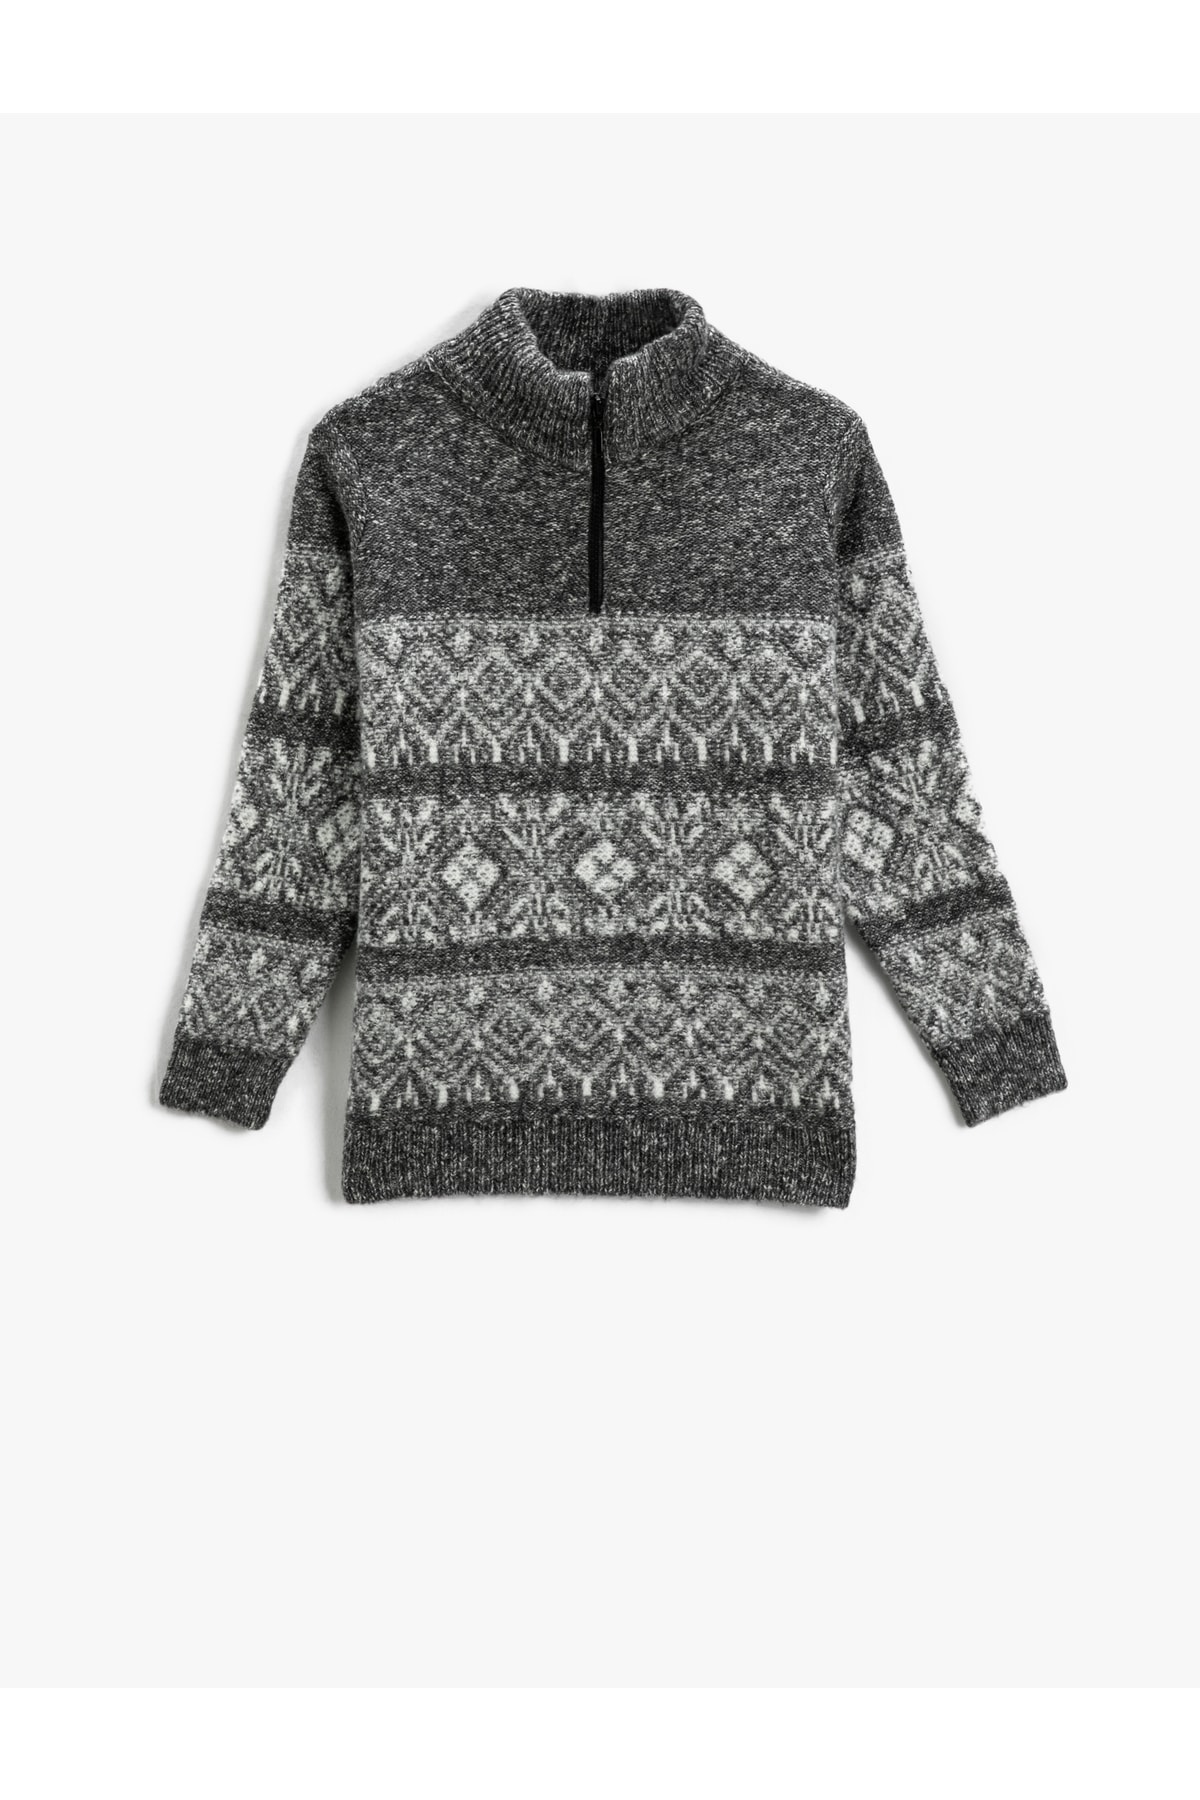 Levně Koton Half-Zip Standing Collar Knitwear Sweater Long Sleeves Patterned